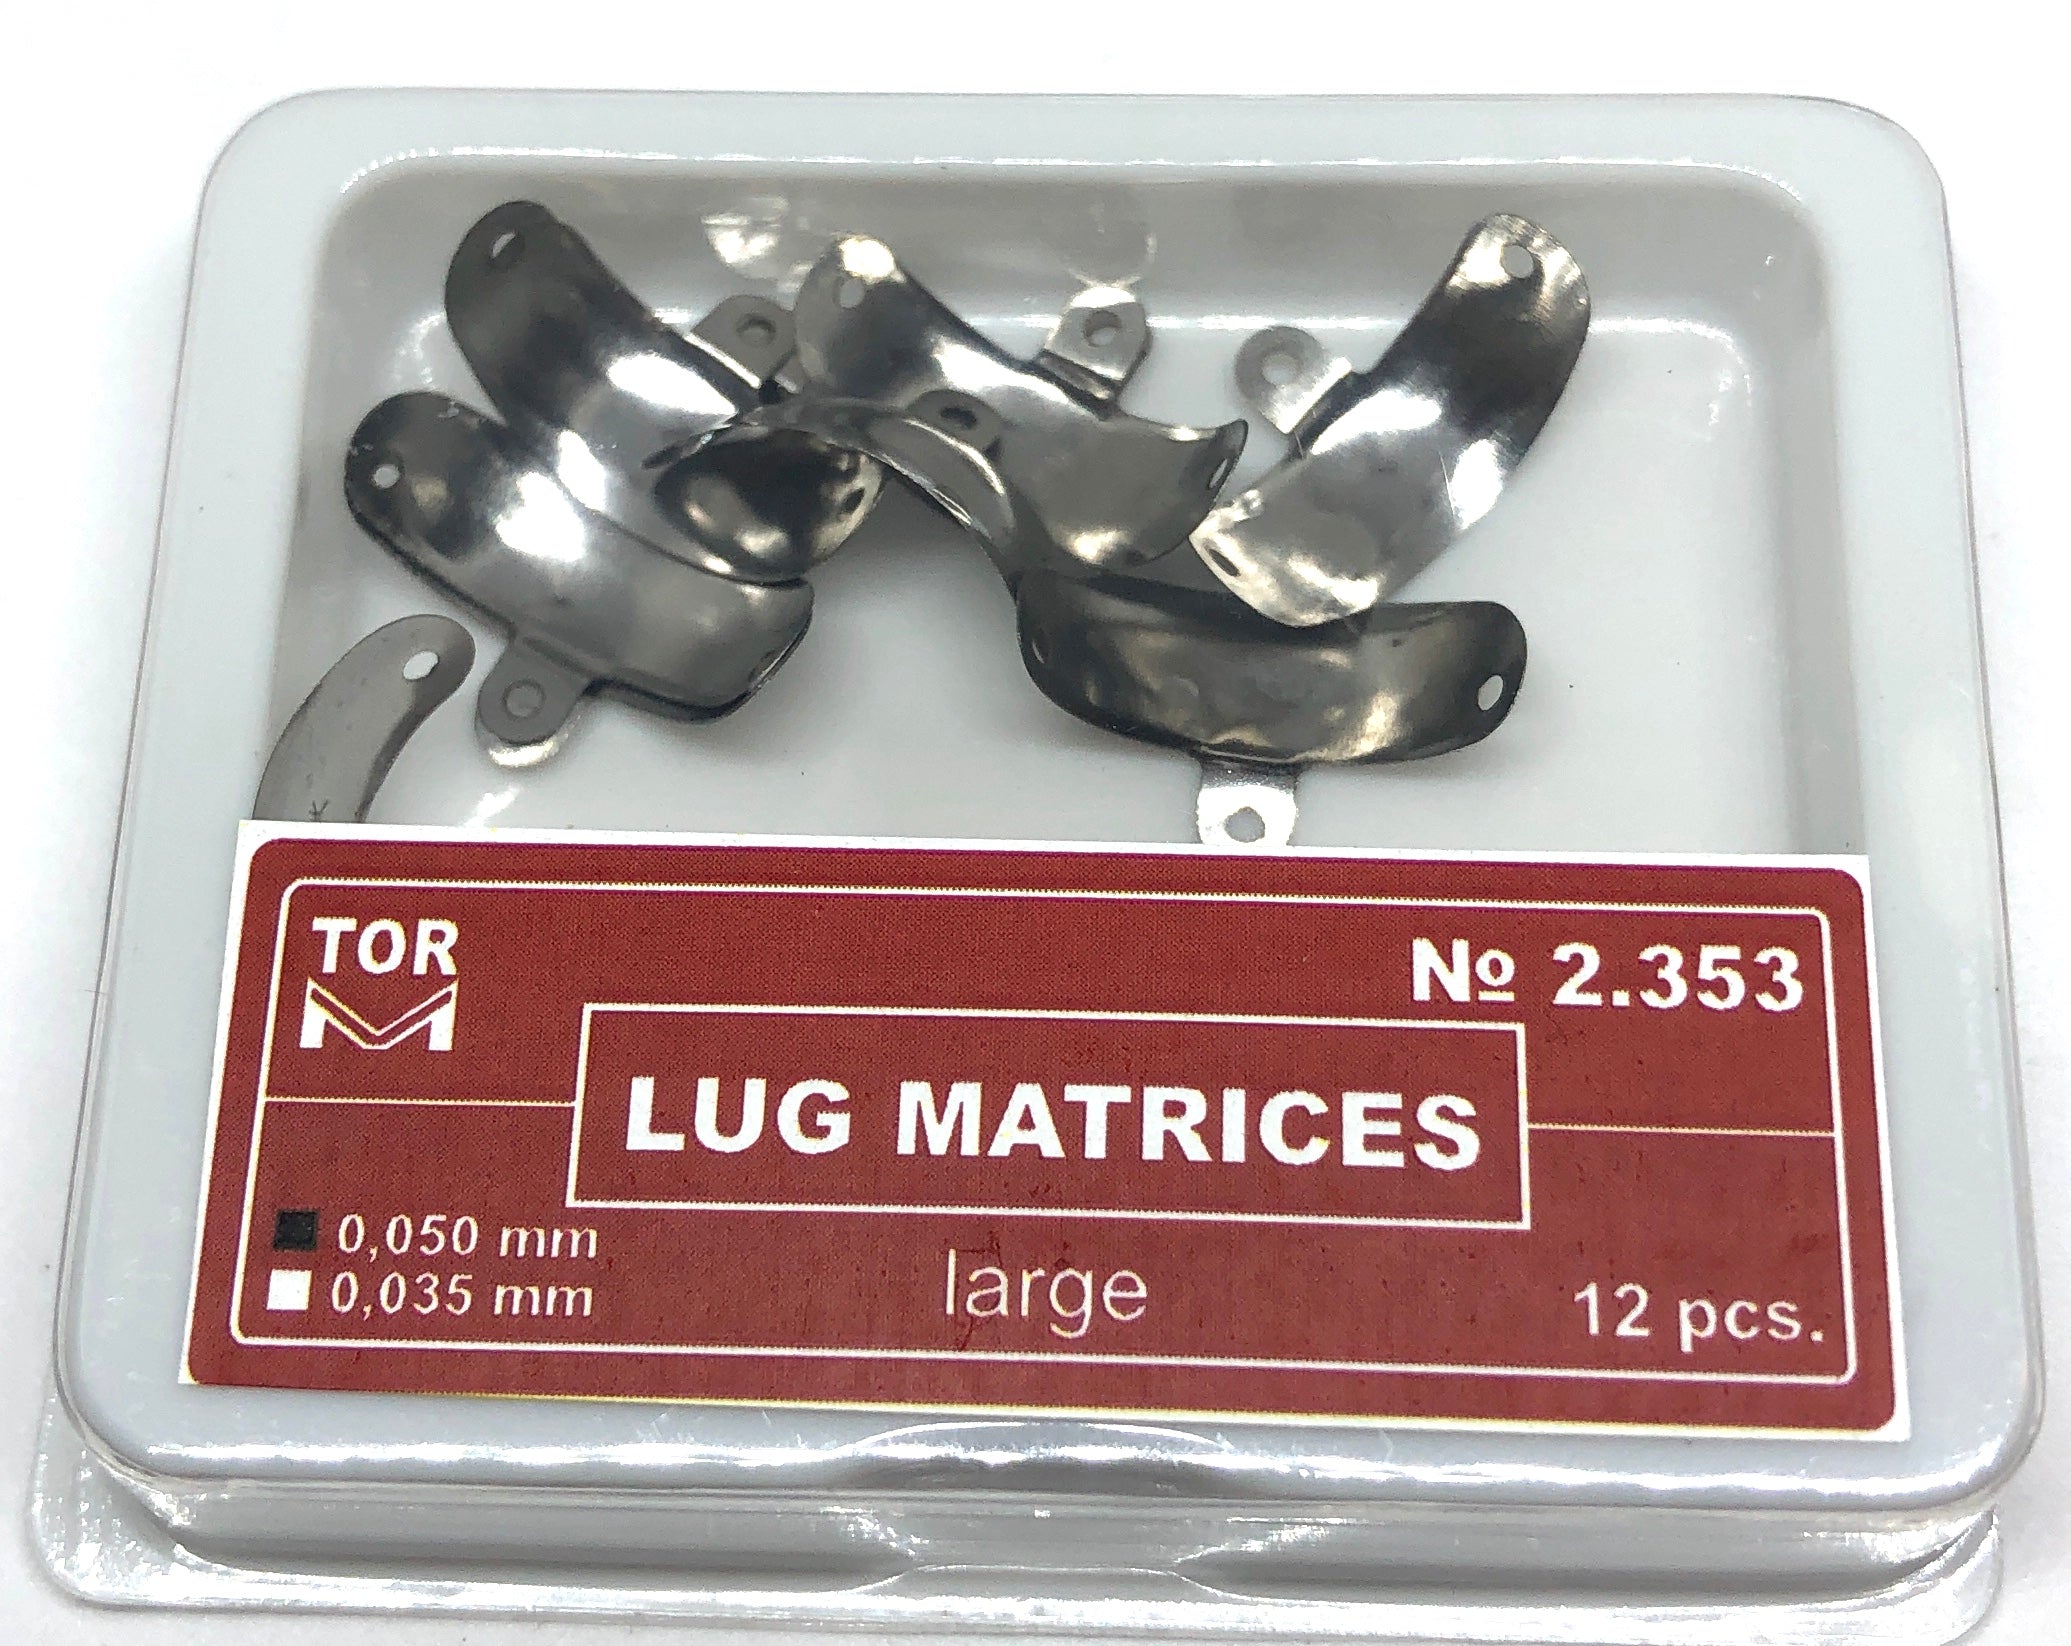 lug-matrices-large-12-pcs